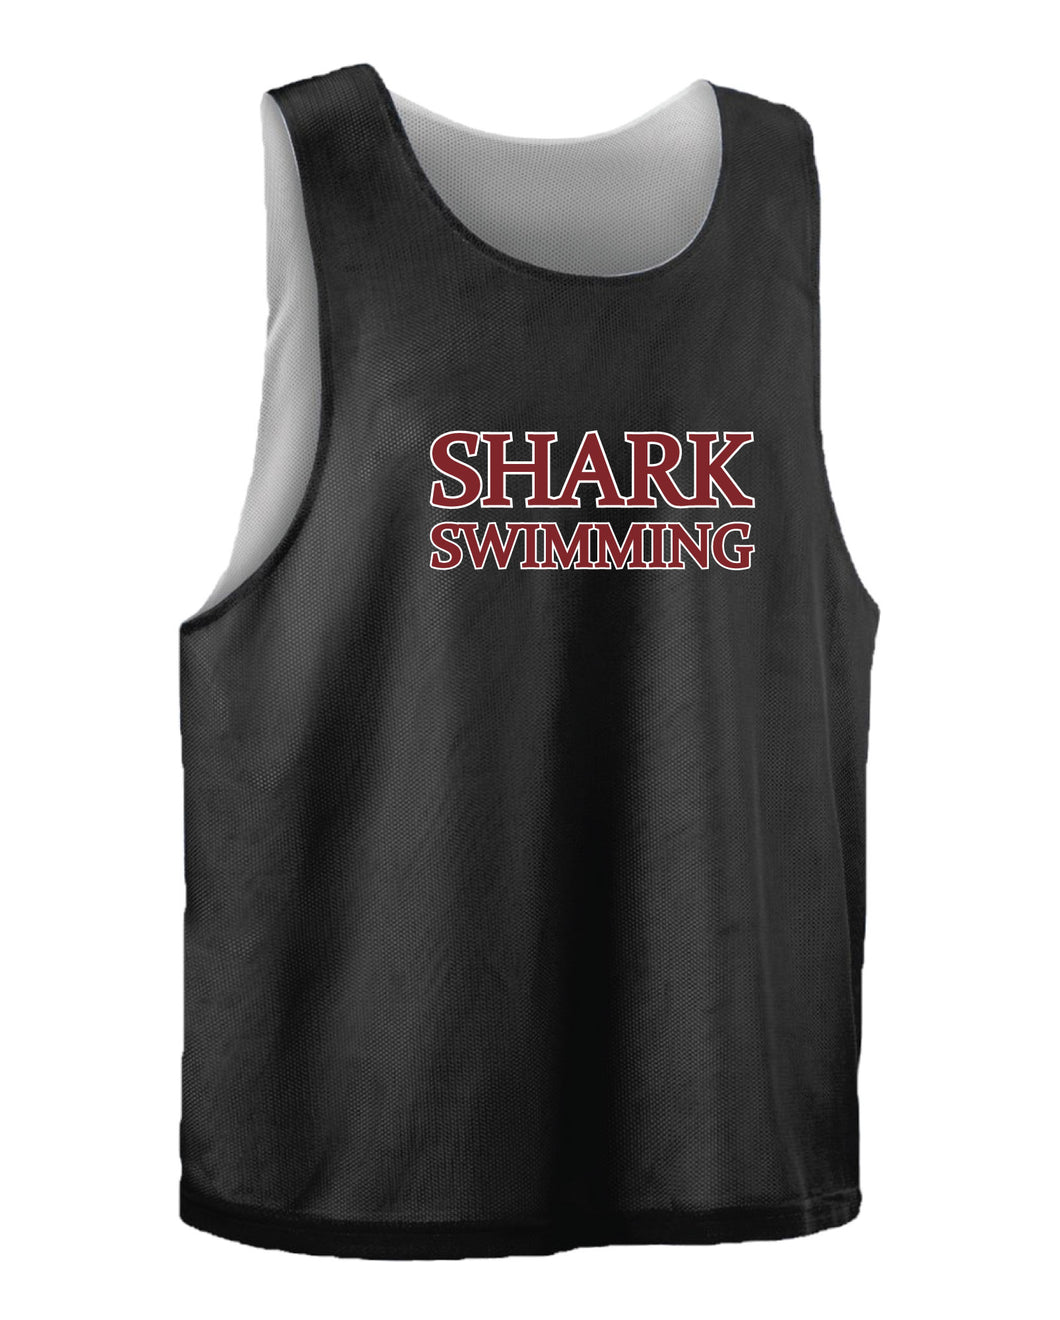 Shark Swimming Pinnie - Black - 5KounT2018